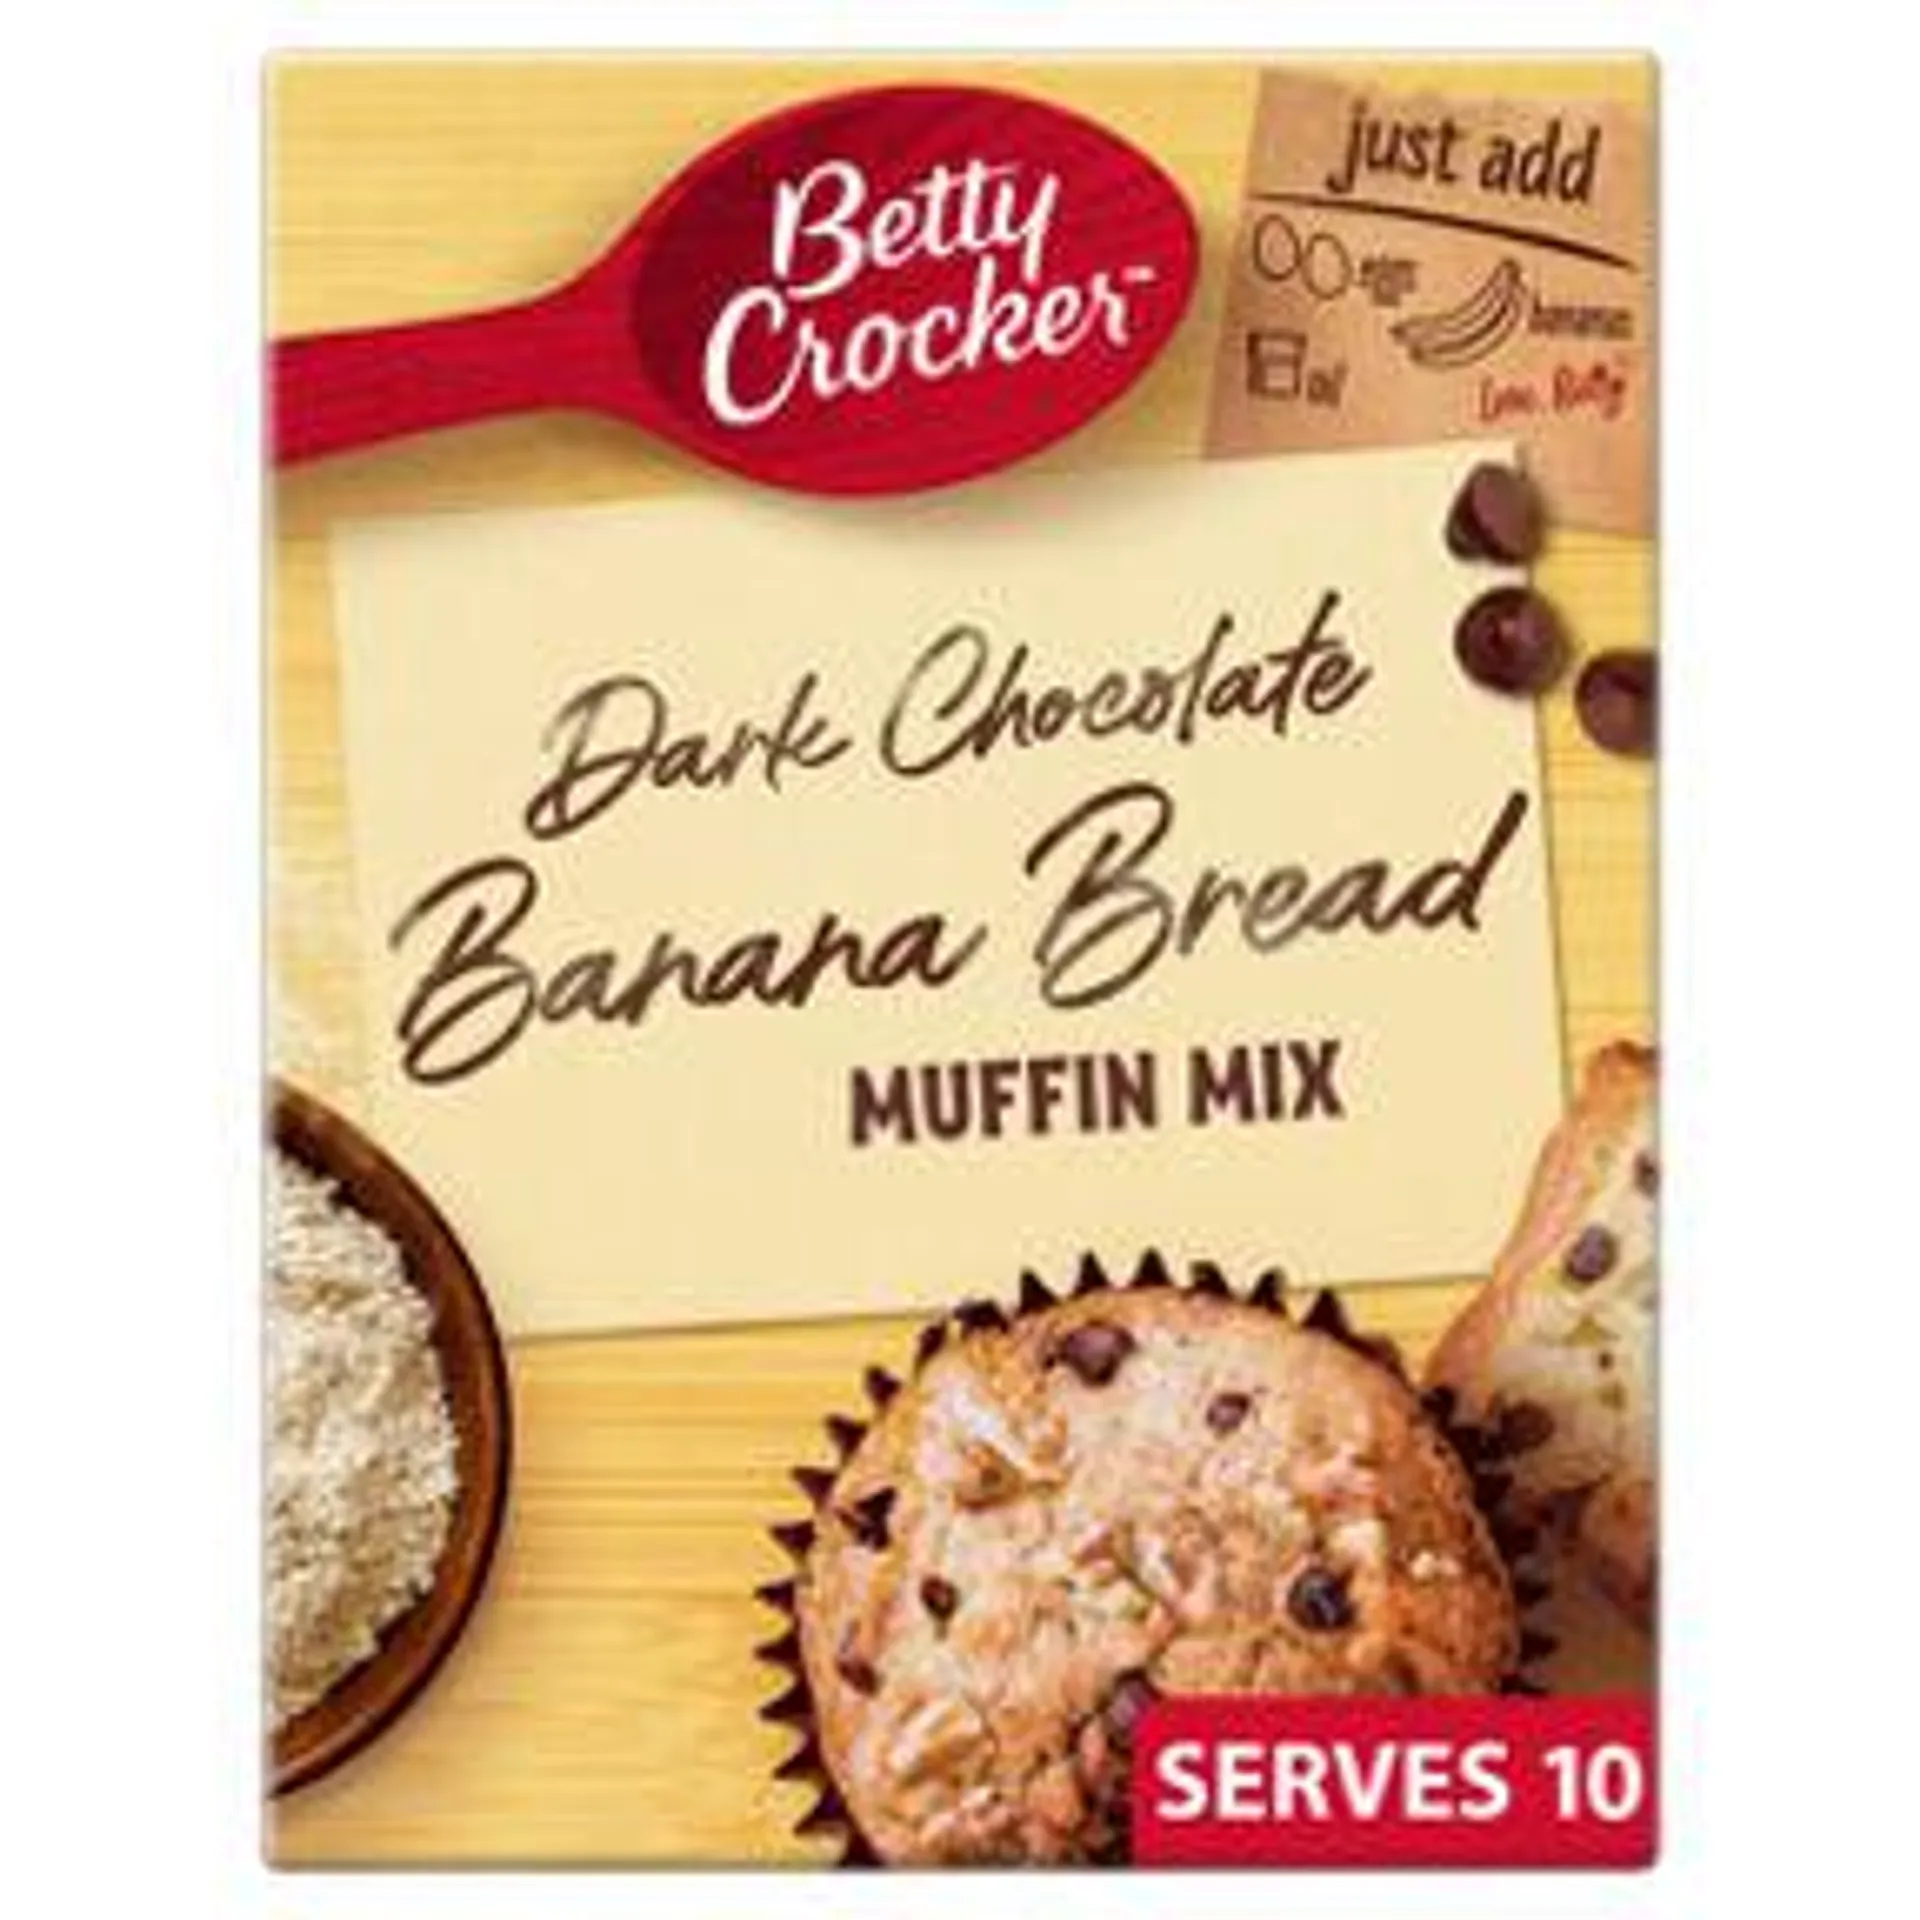 Betty Crocker Dark Chocolate Banana Bread Muffin Mix